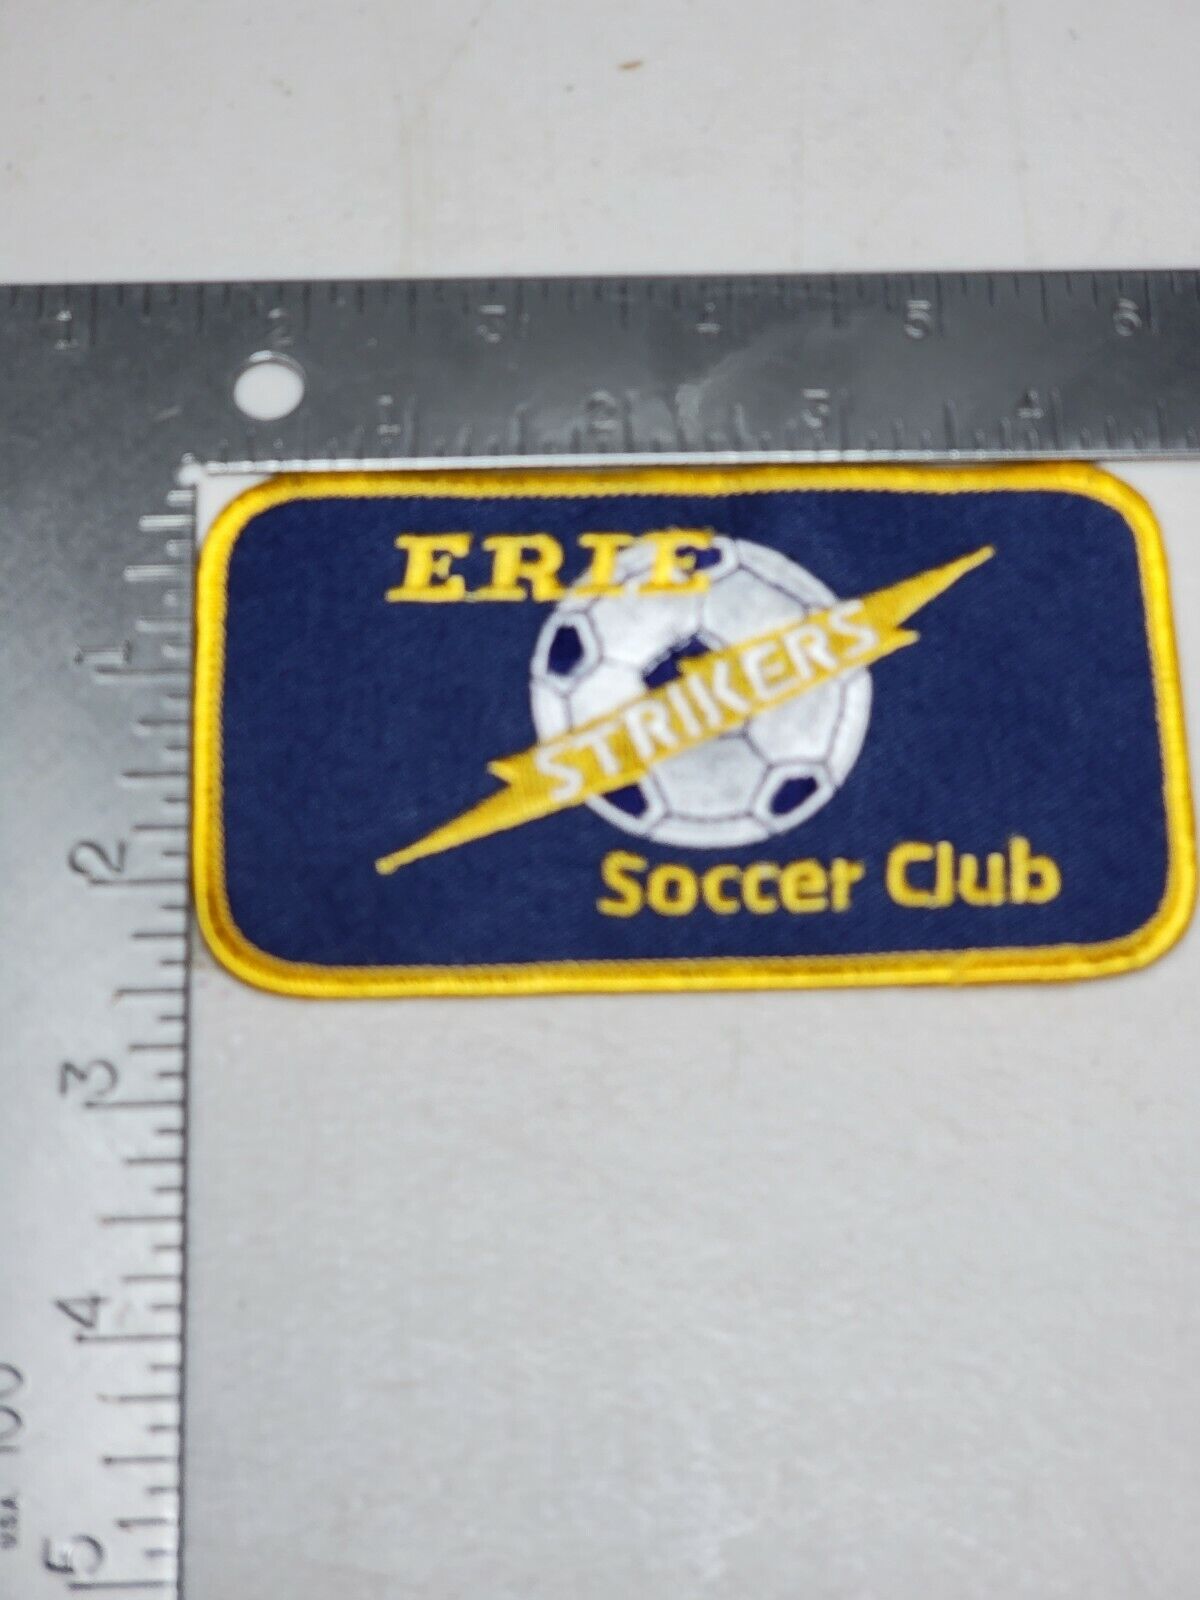 J Erie strikers club Soccer Patch